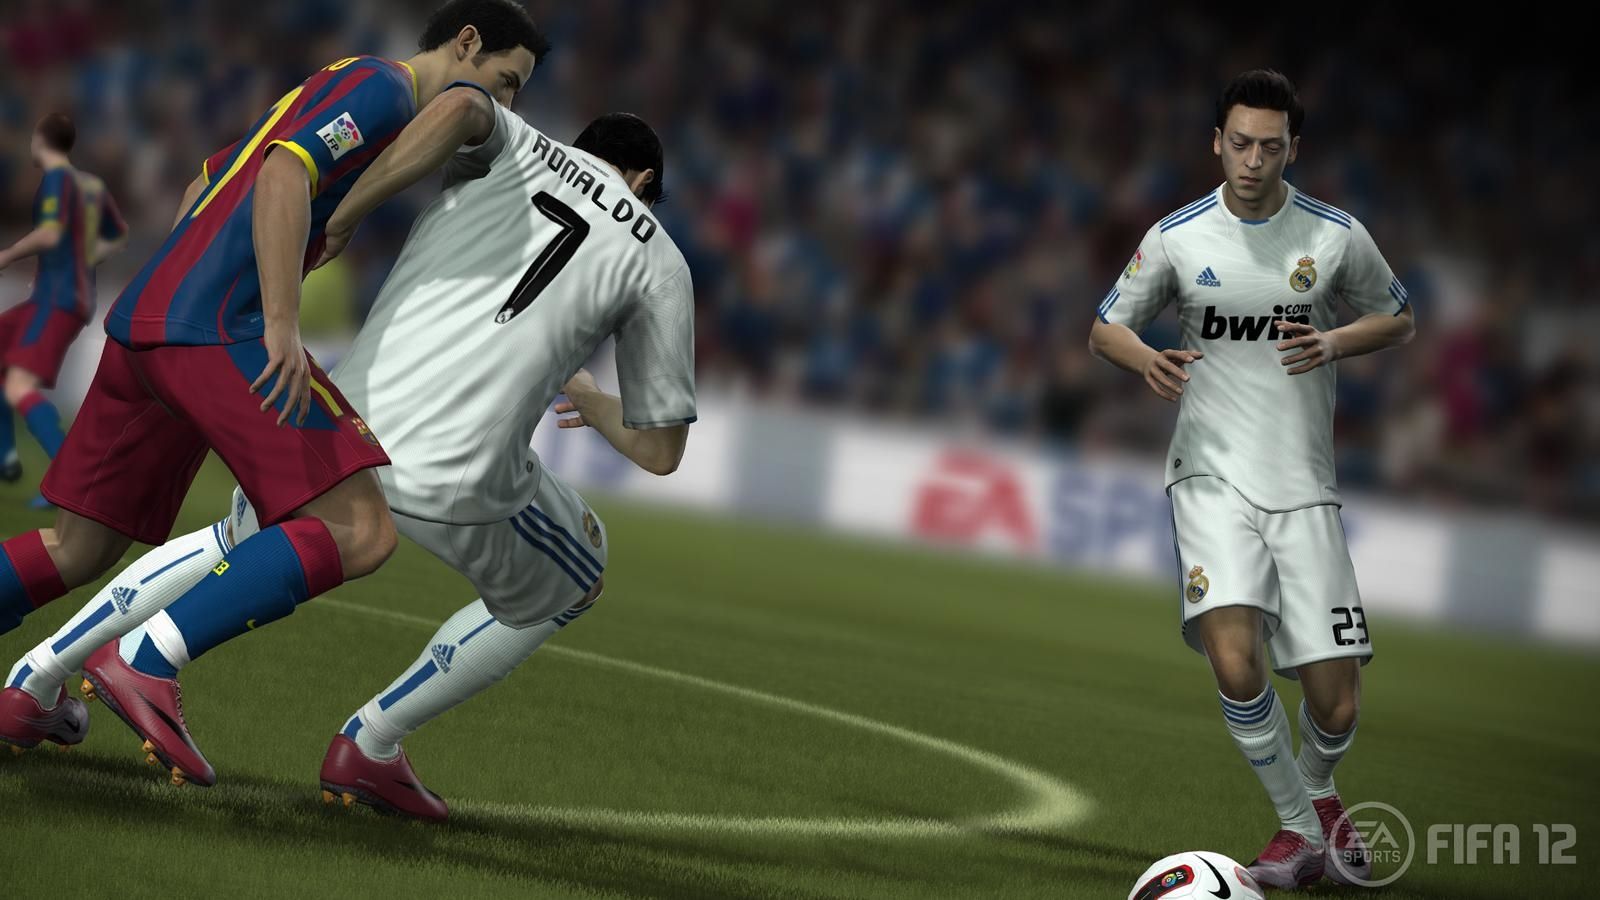 FIFA 12 - Image 3